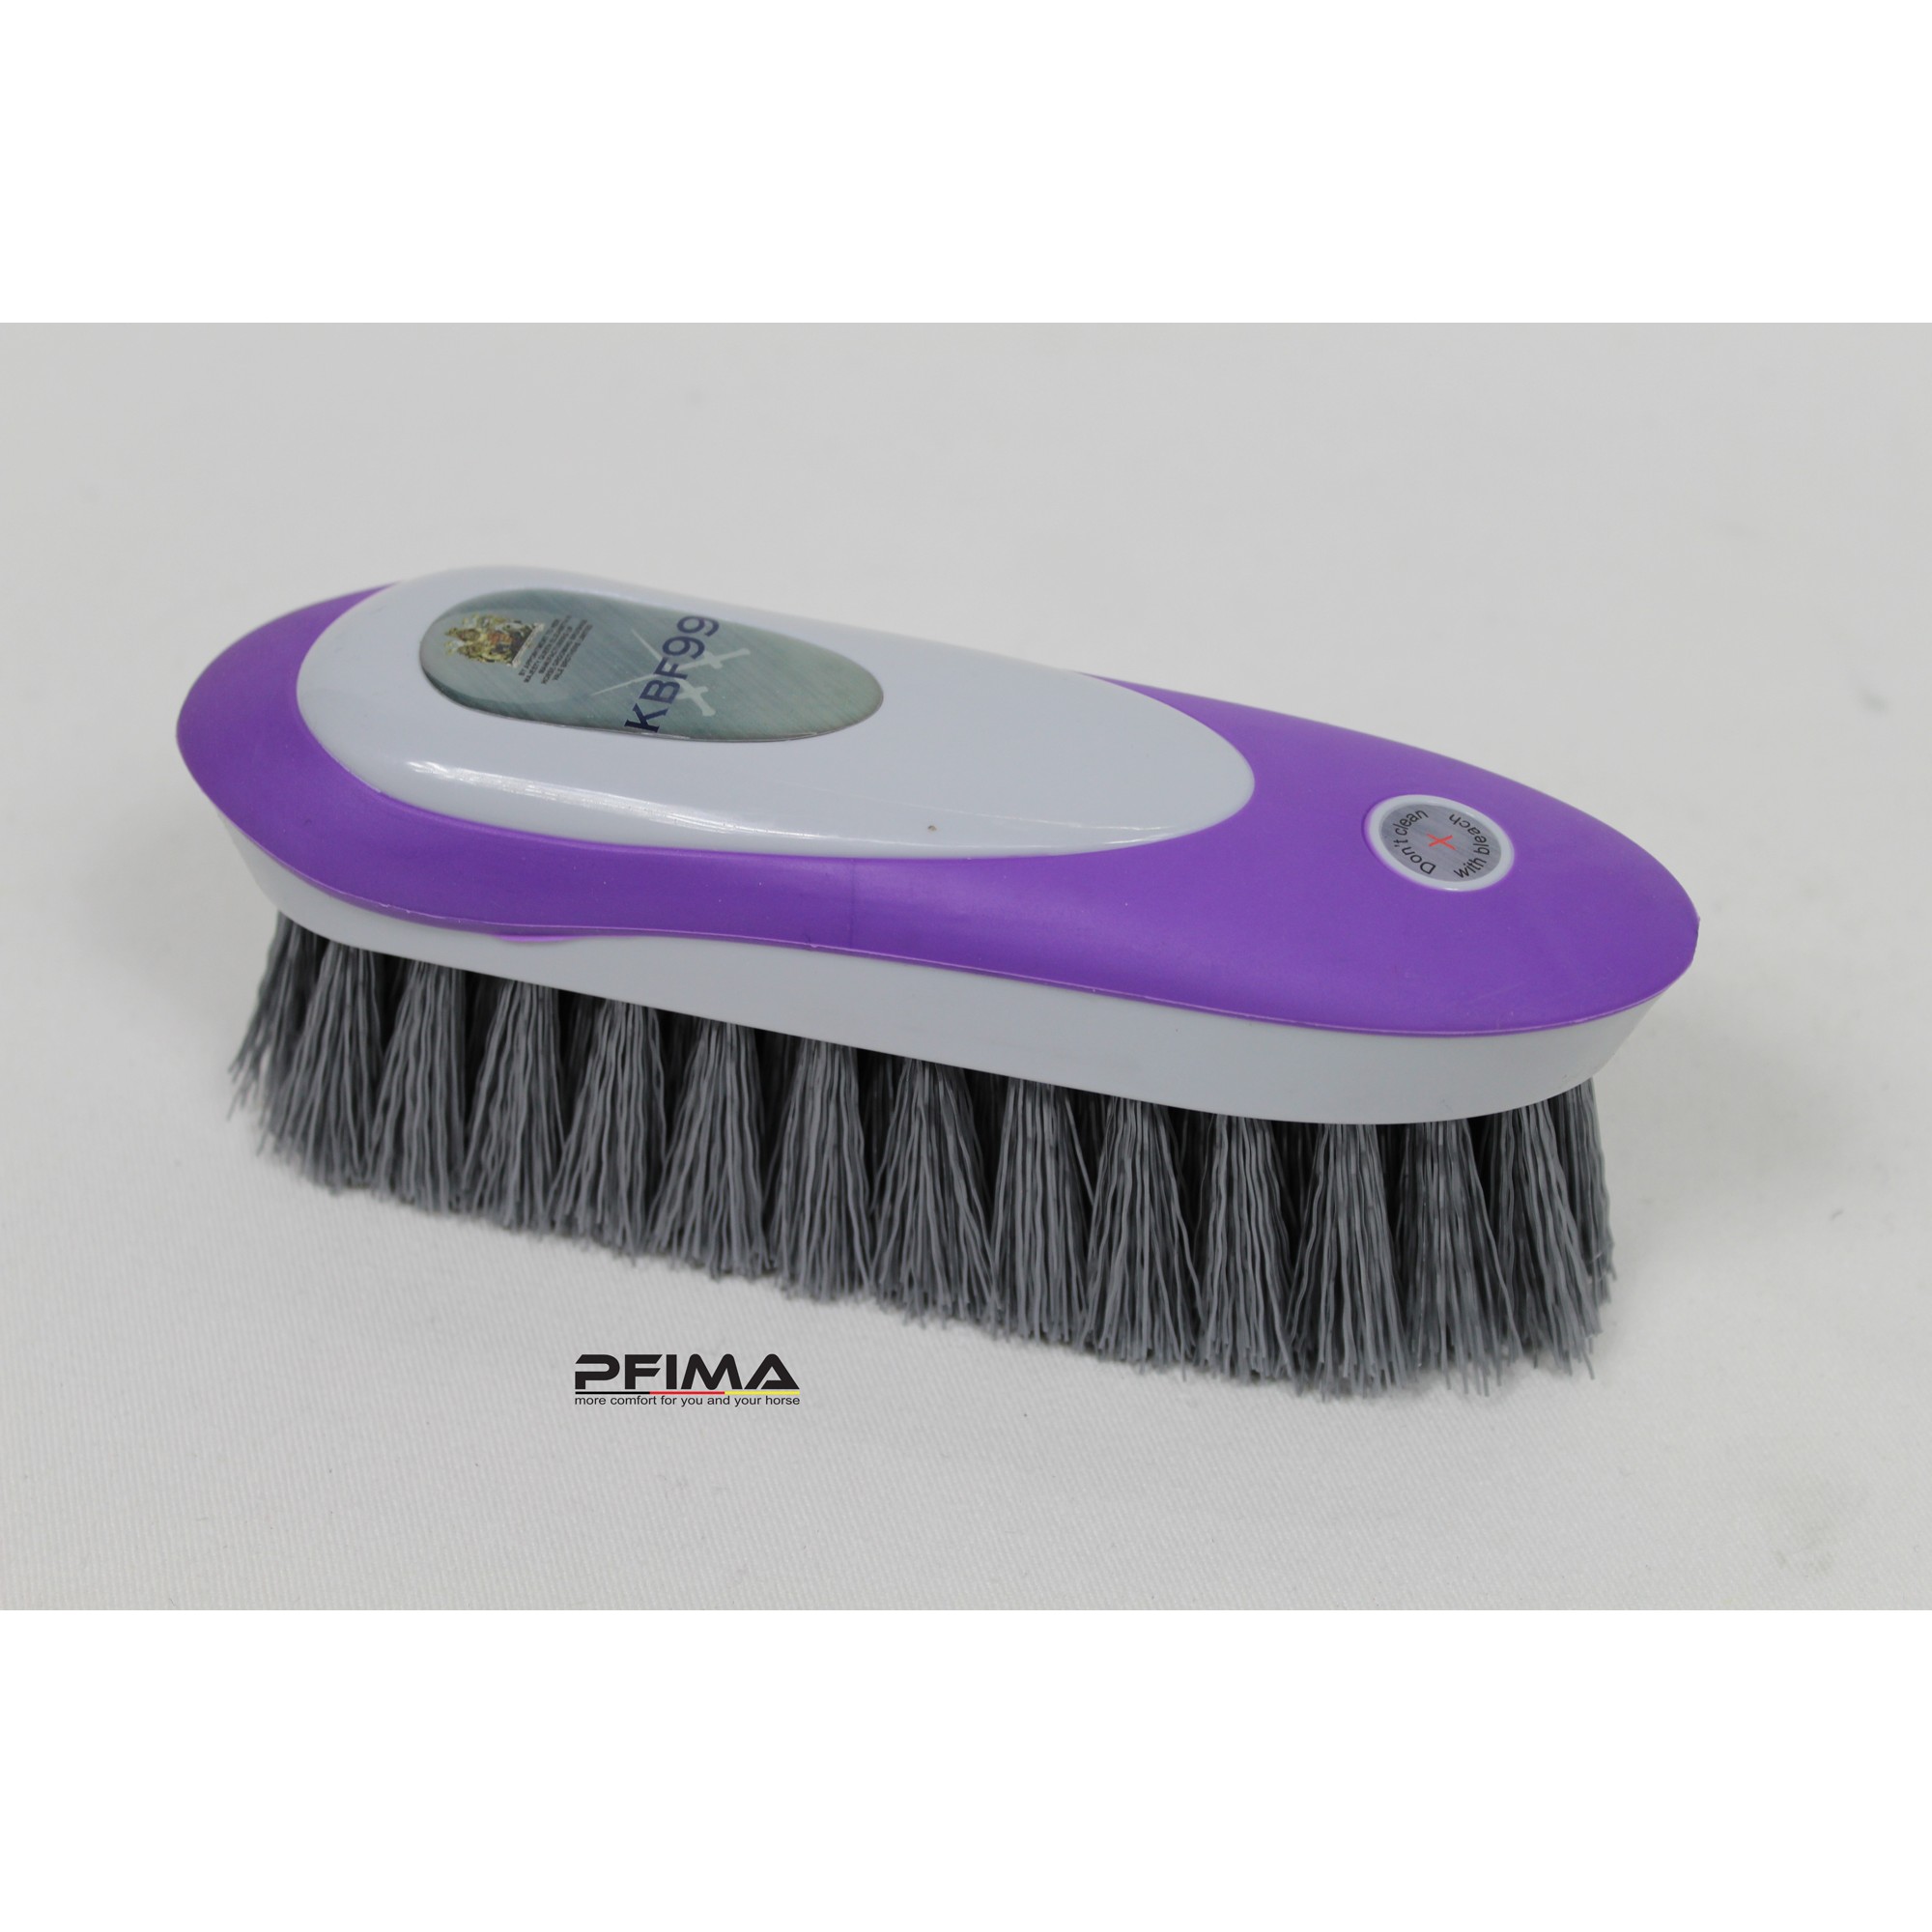 KBF99 Dandy Brush (short bristles), purple